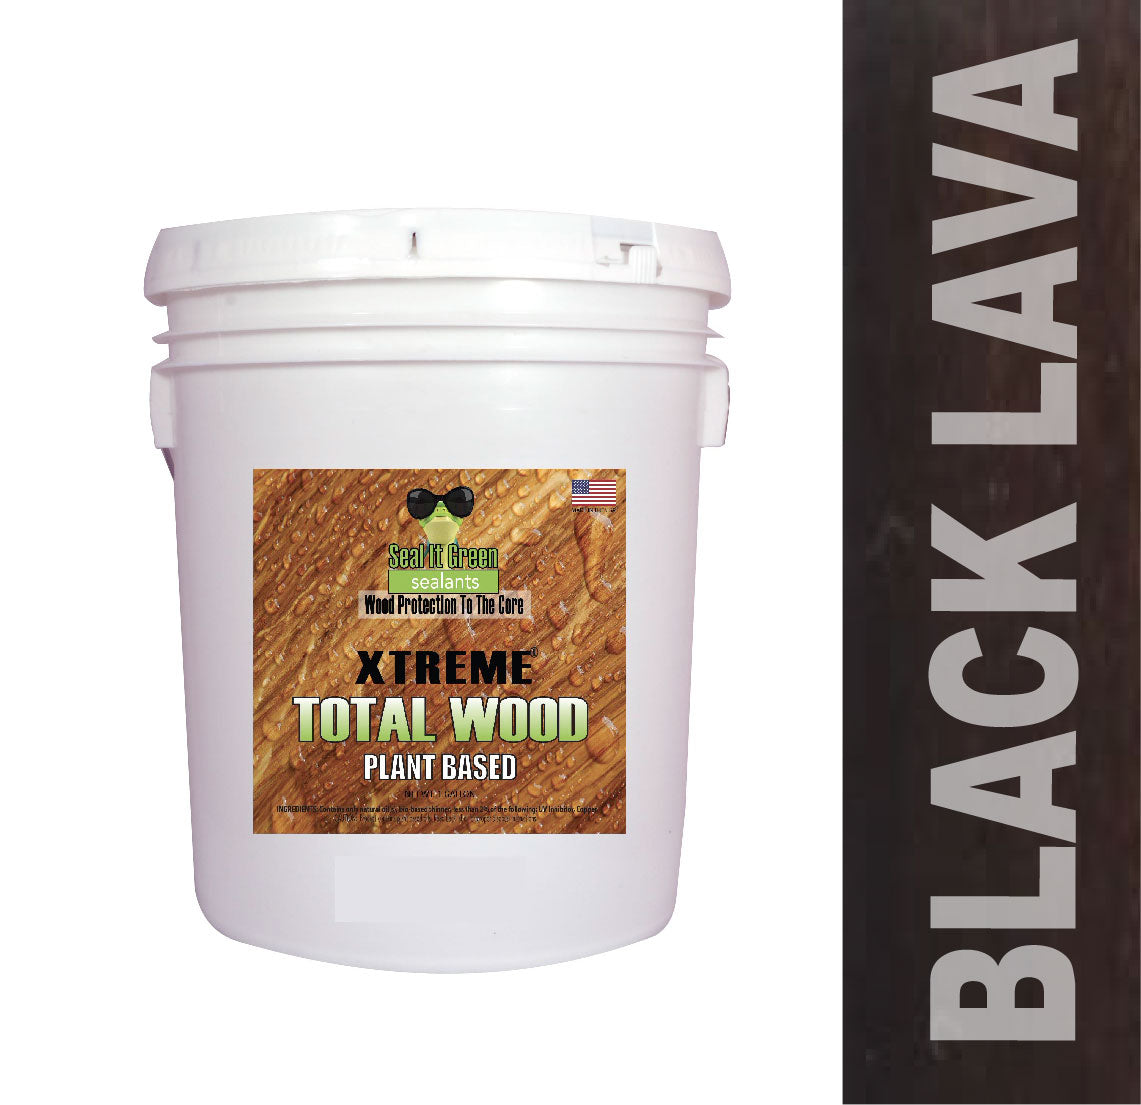 Black lava - Xtreme total wood sealer